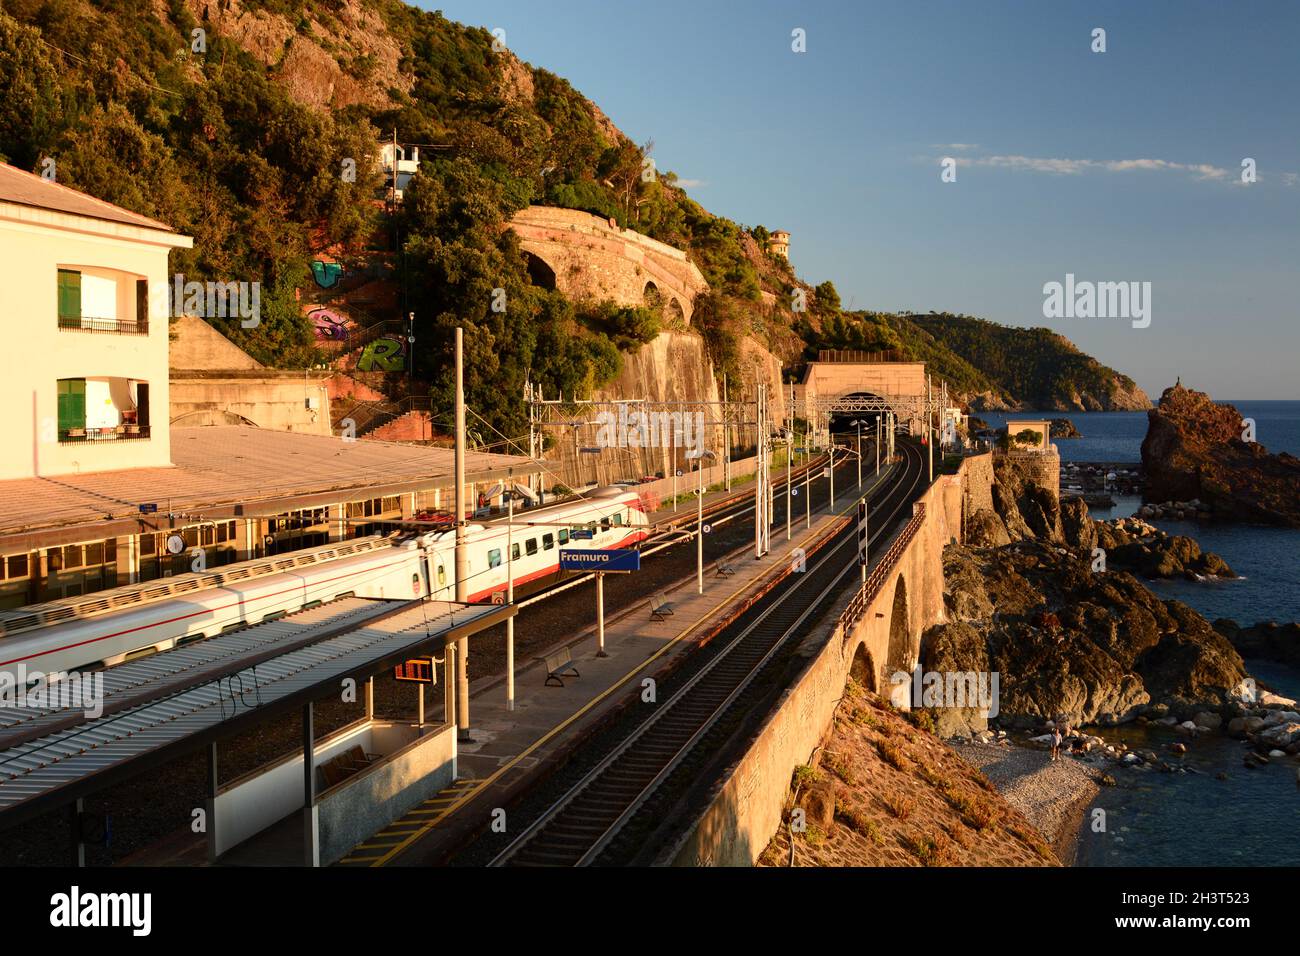 The train station. Framura. La Spezia province. Liguria. Italy Stock Photo